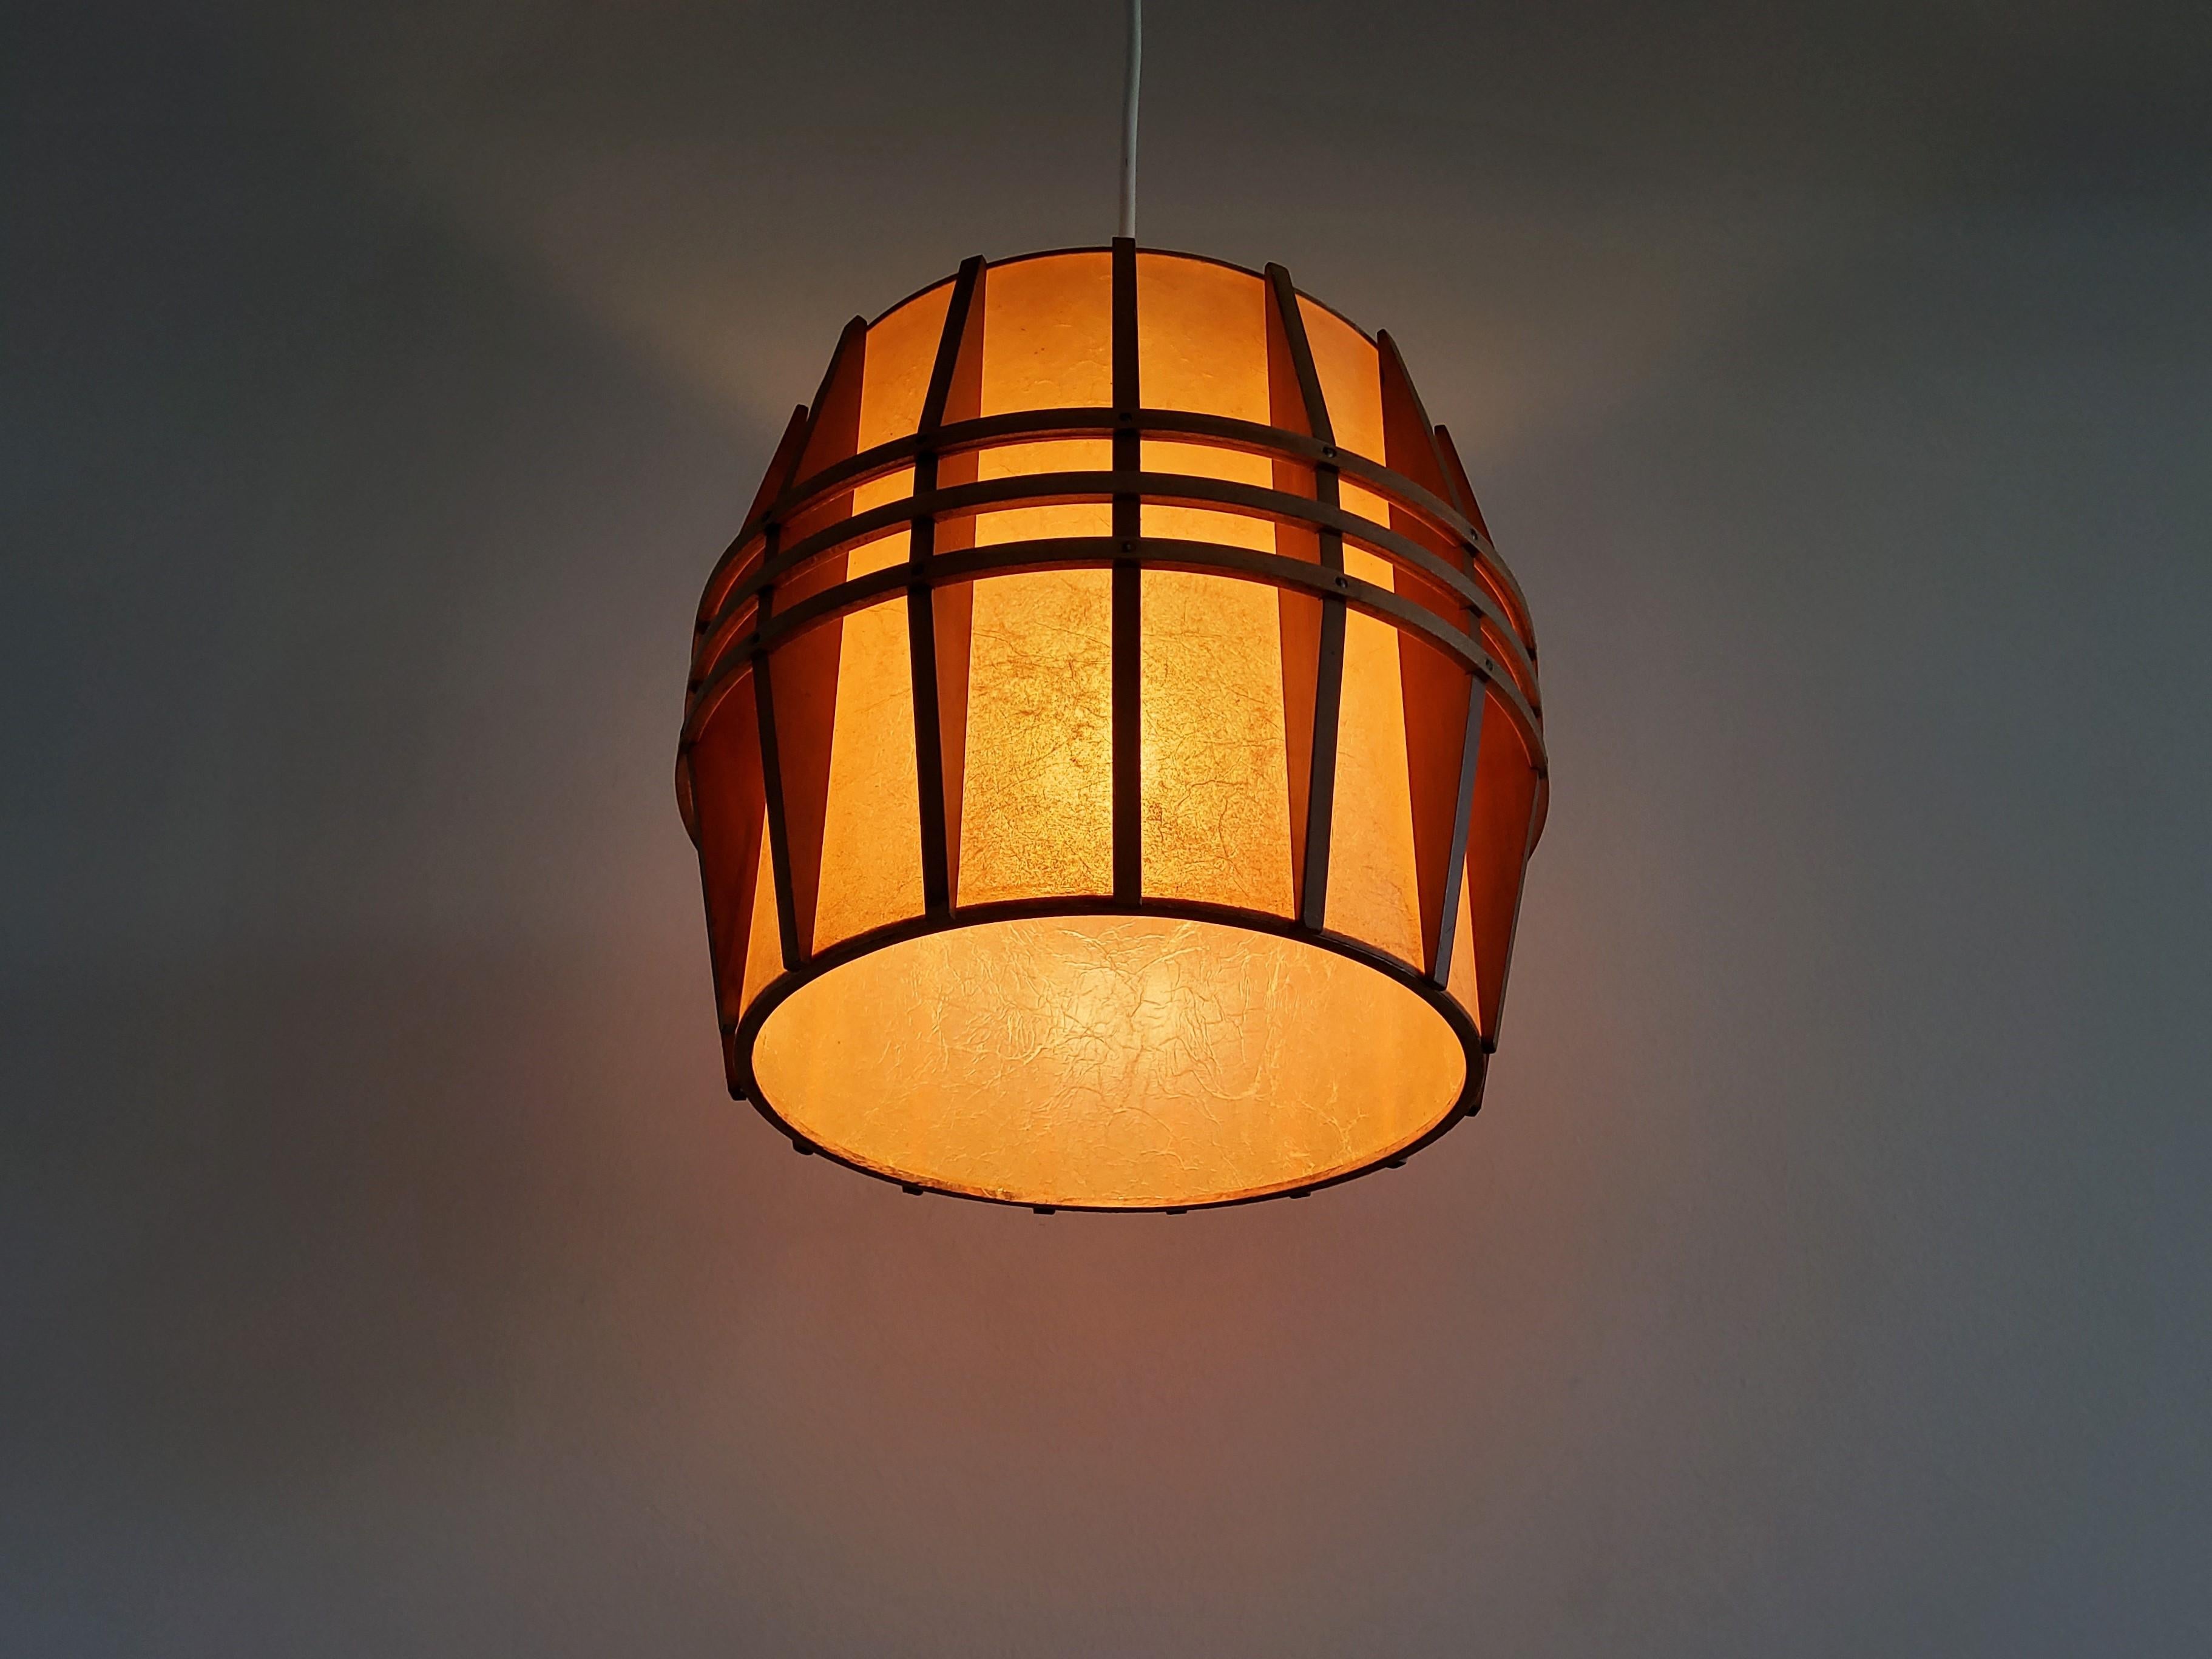 Plastic Vintage Pendant Lamp with Wooden Details, 1960's